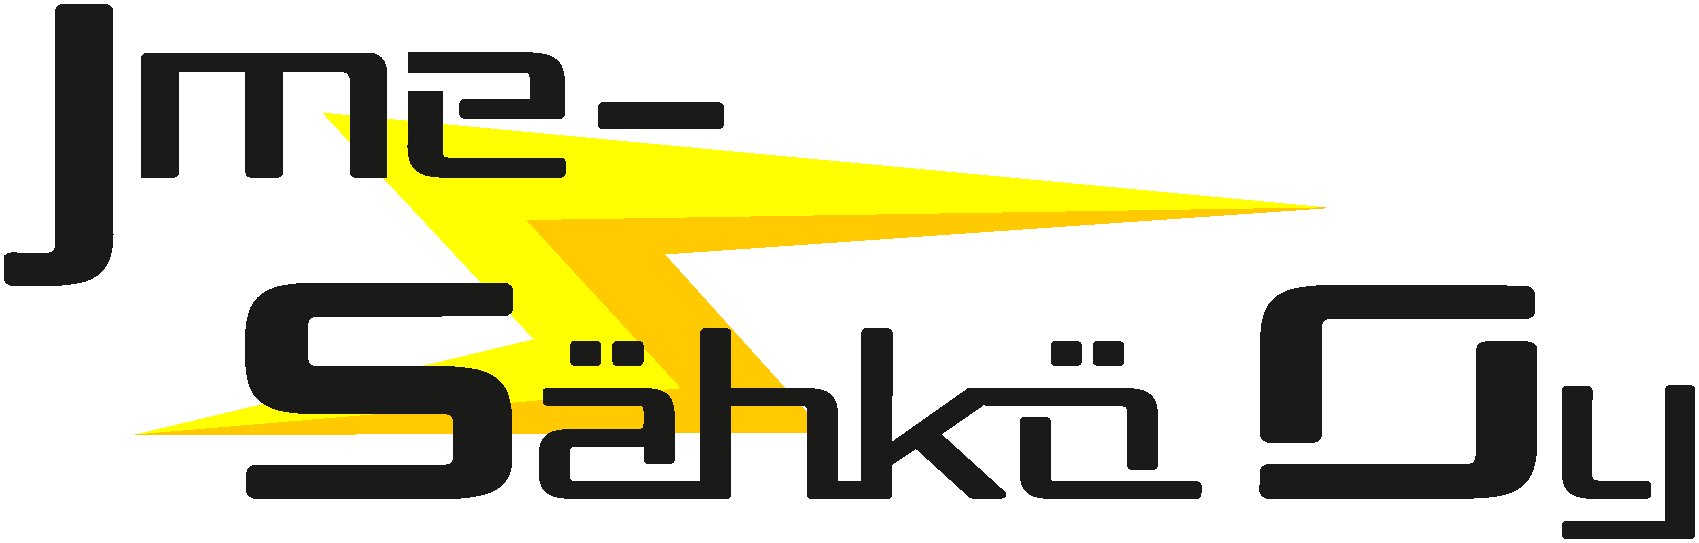 JME-Sähkö-logo